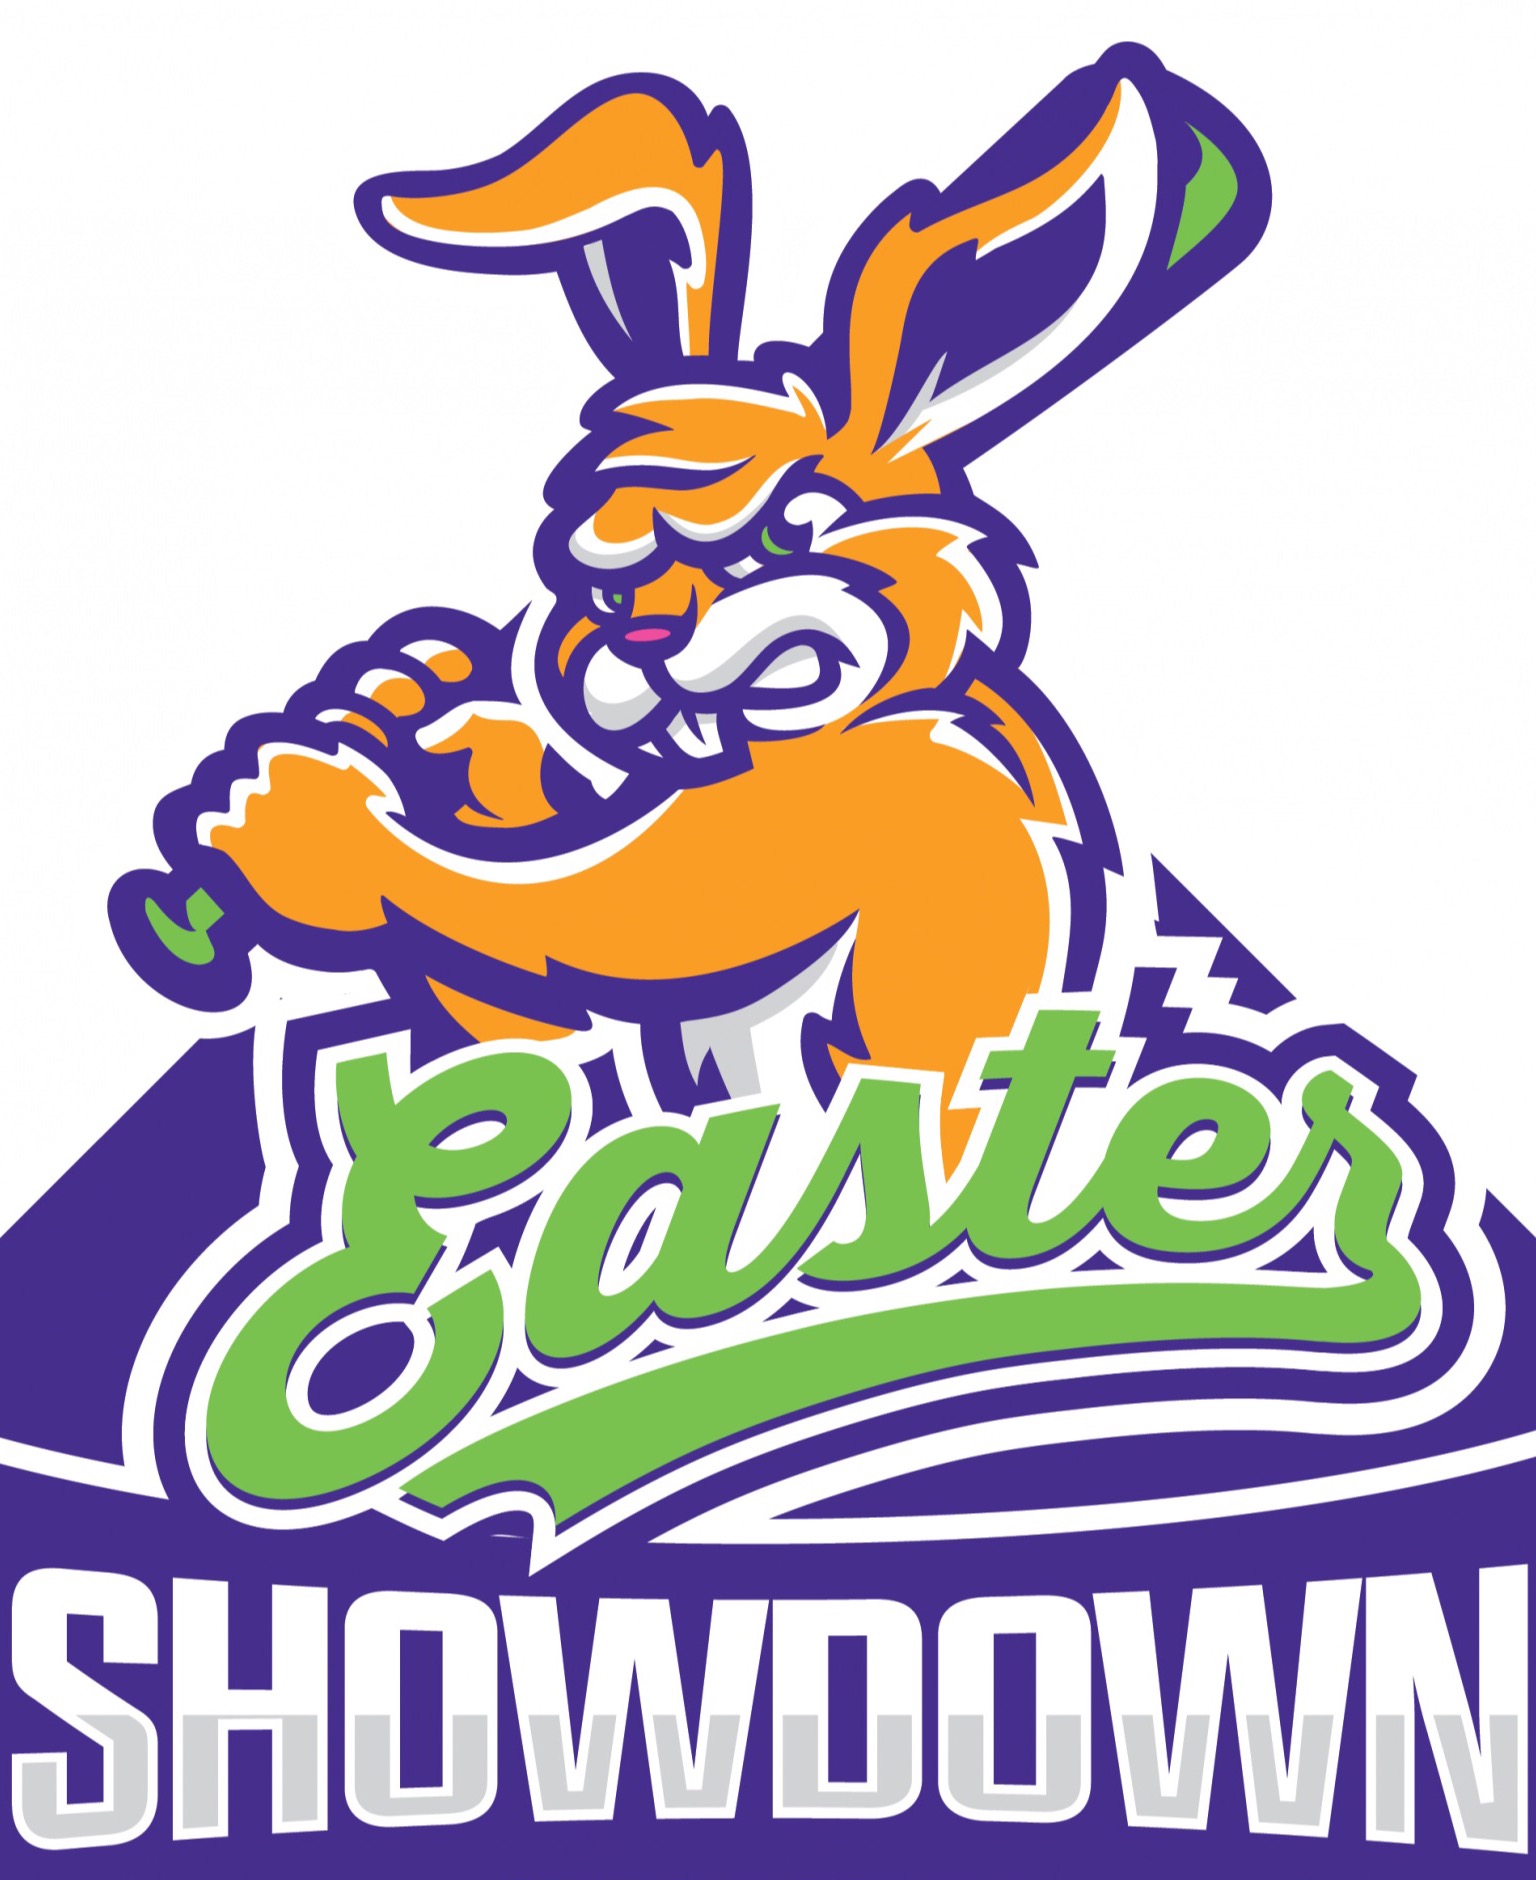  17 Softball Easter Saturday Showdown